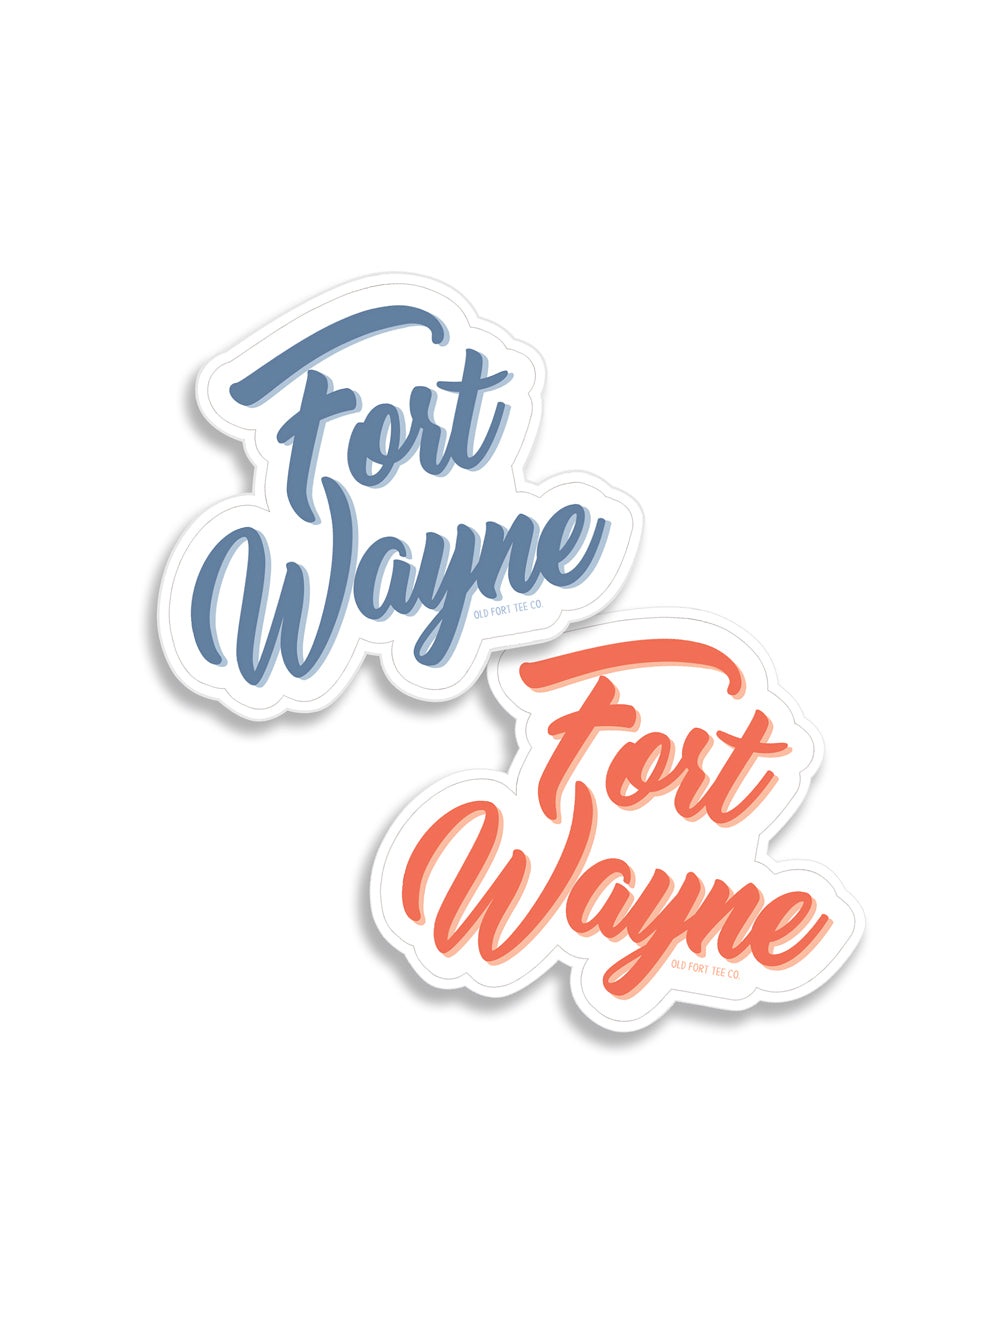 Script Signature Fort Wayne die cut sticker in two colors